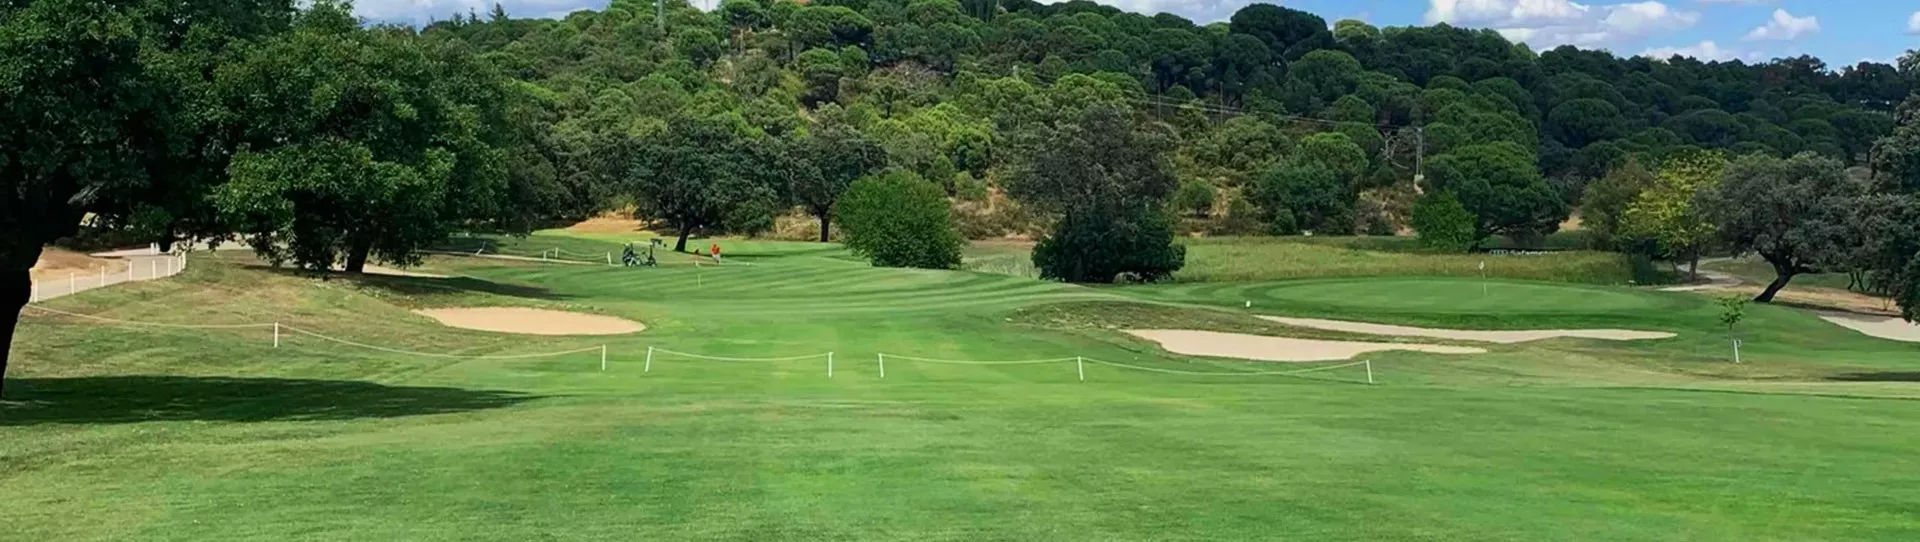 Spain golf courses - Real Club de Campo de Cordoba - Photo 3